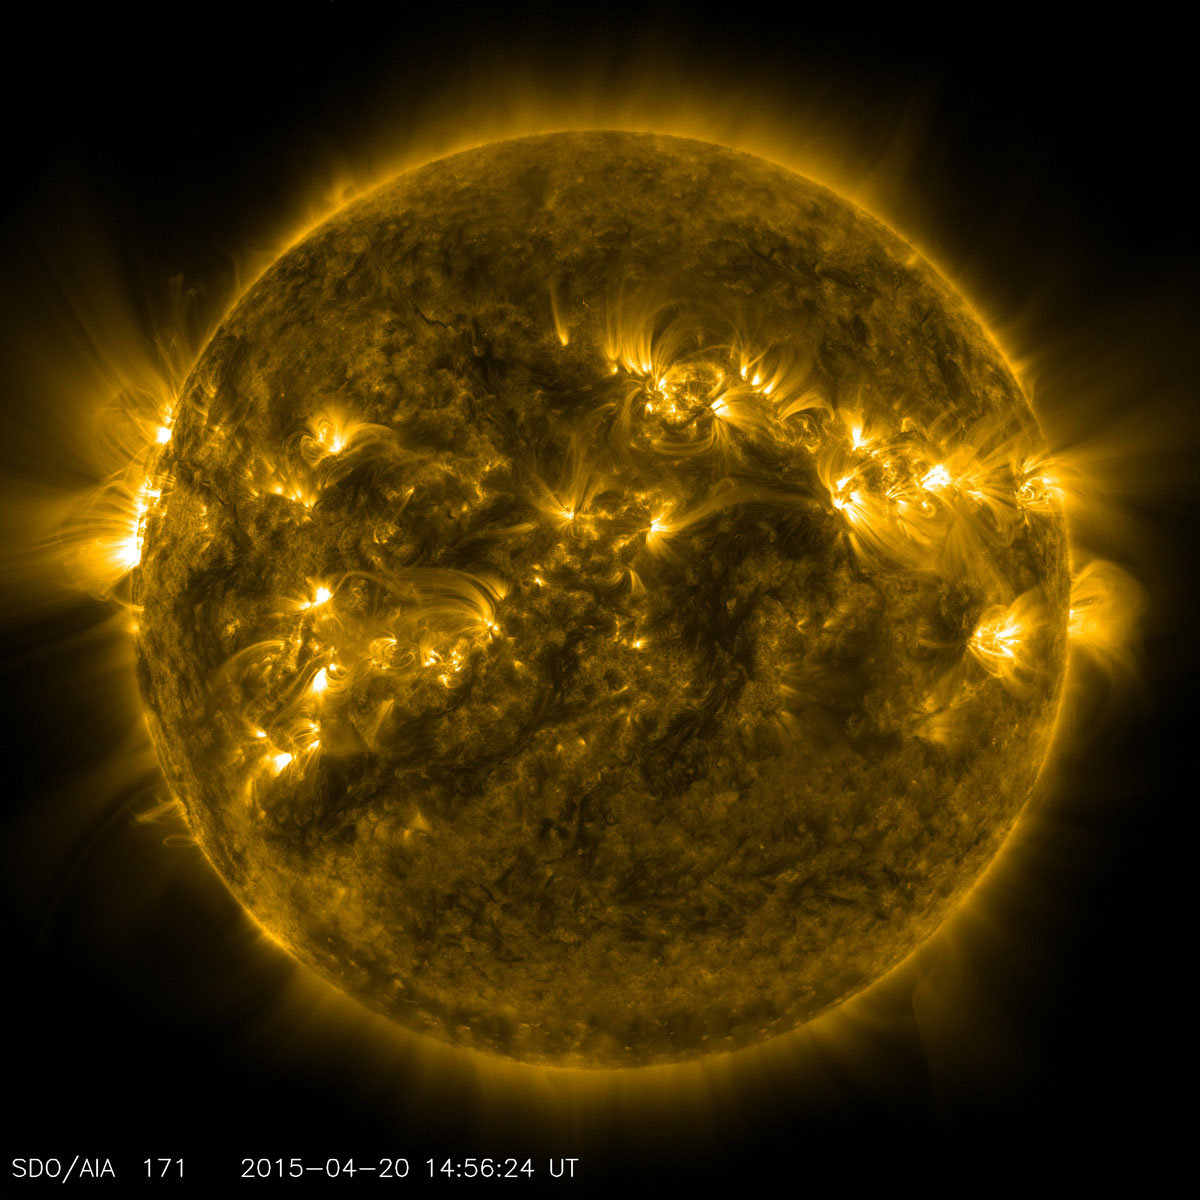 NASA image of our sun